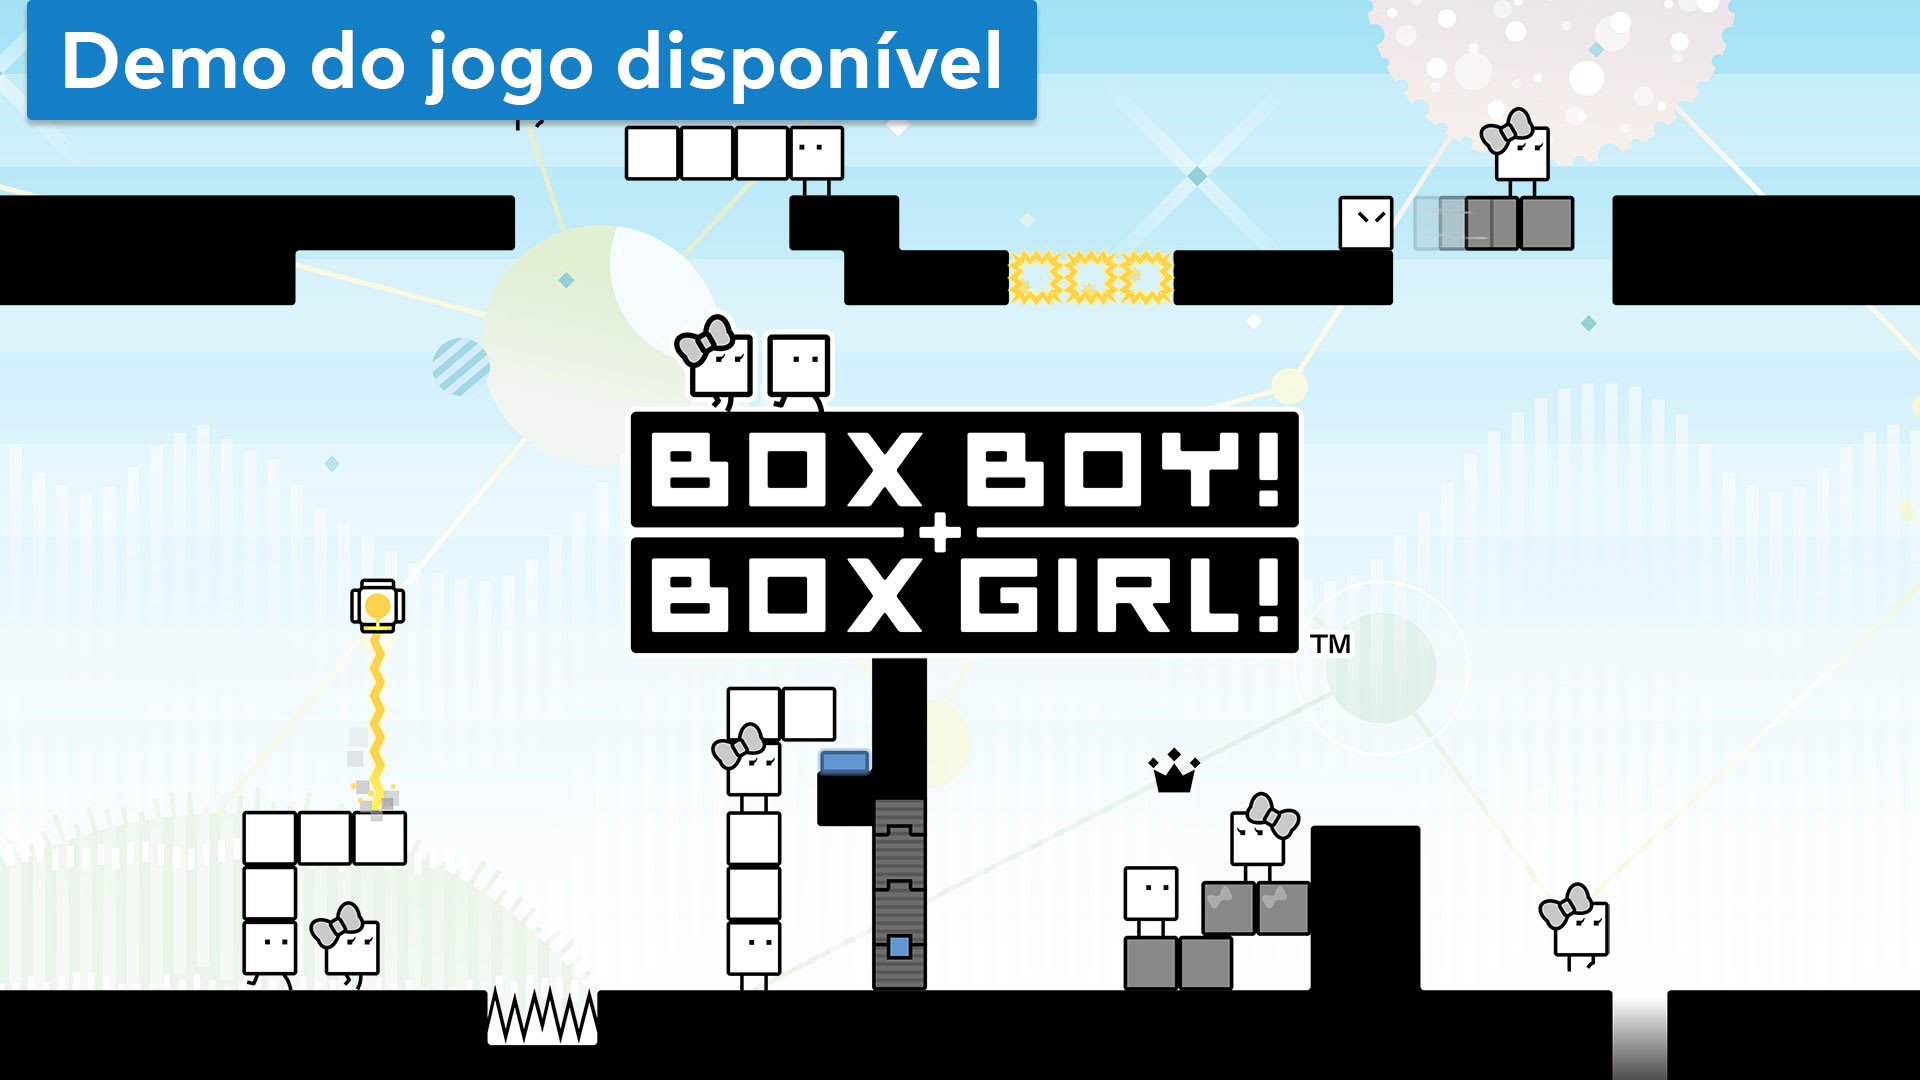 BOXBOY! + BOXGIRL!™ 